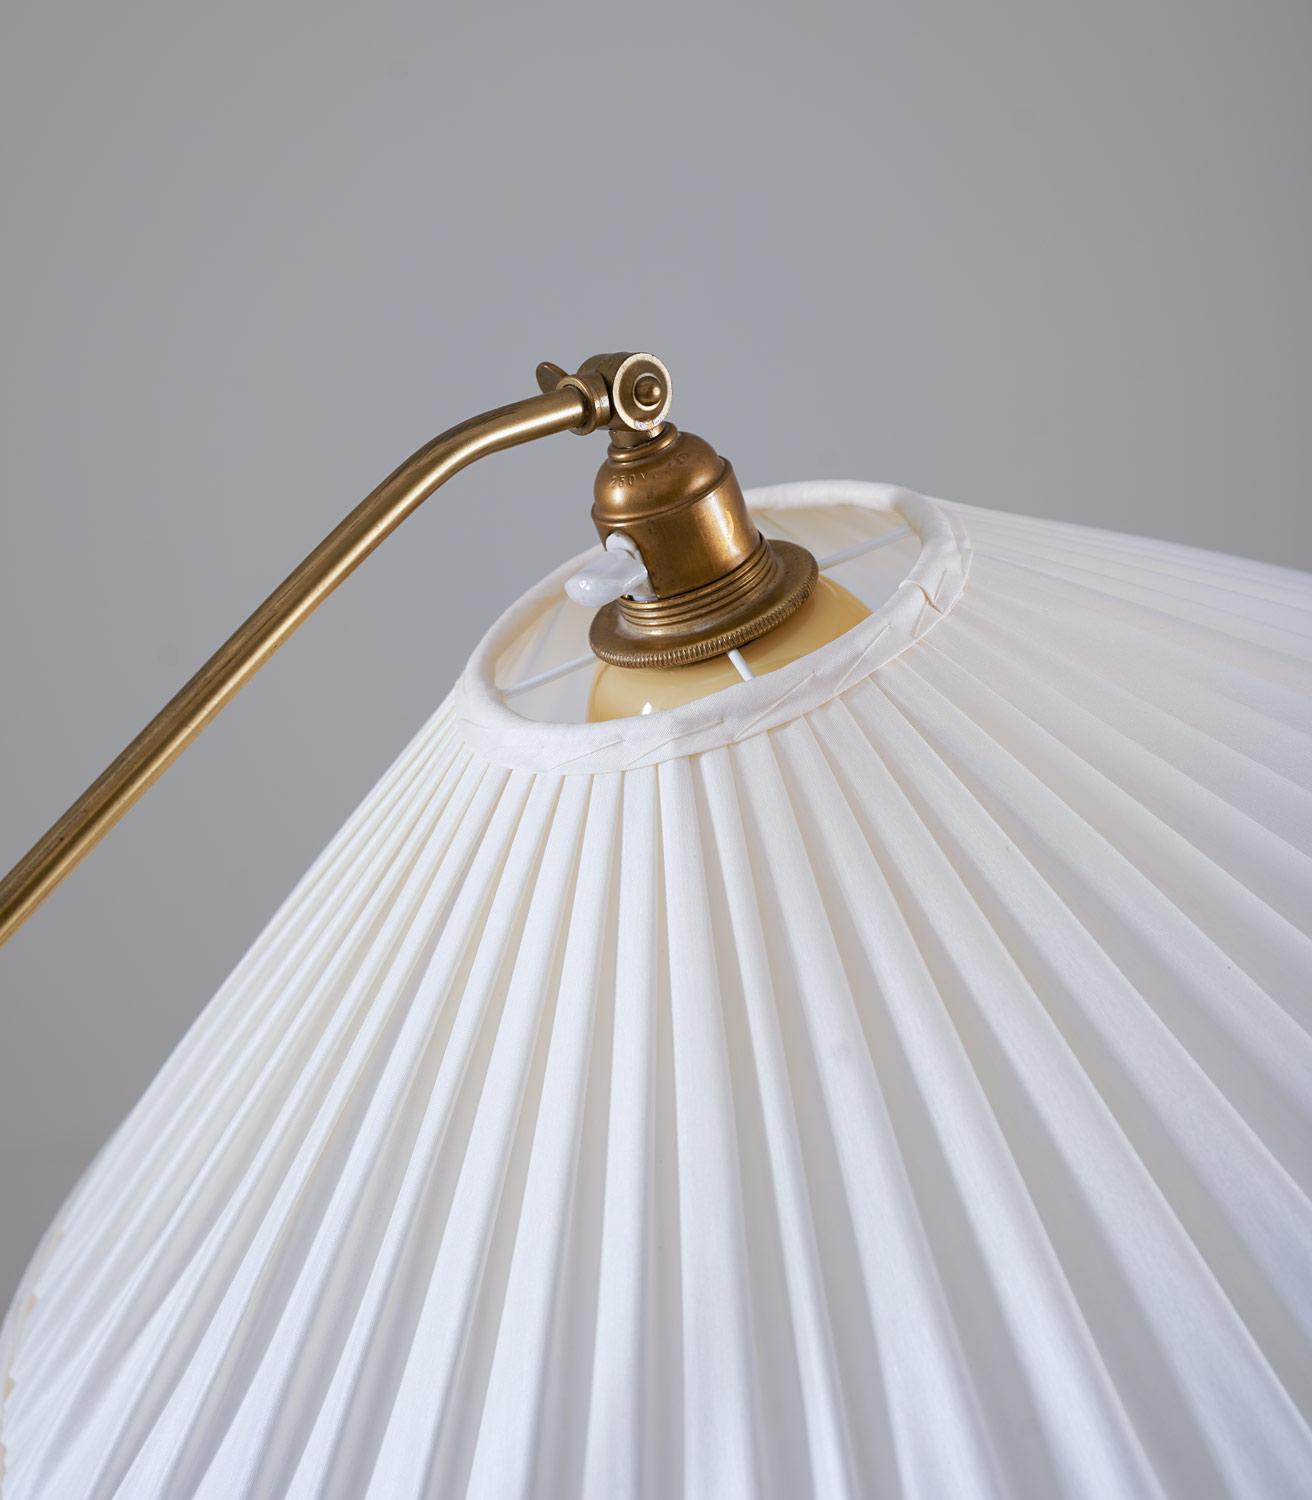 Swedish Art Deco Floor Lamp in Brass, 1930s For Sale 2